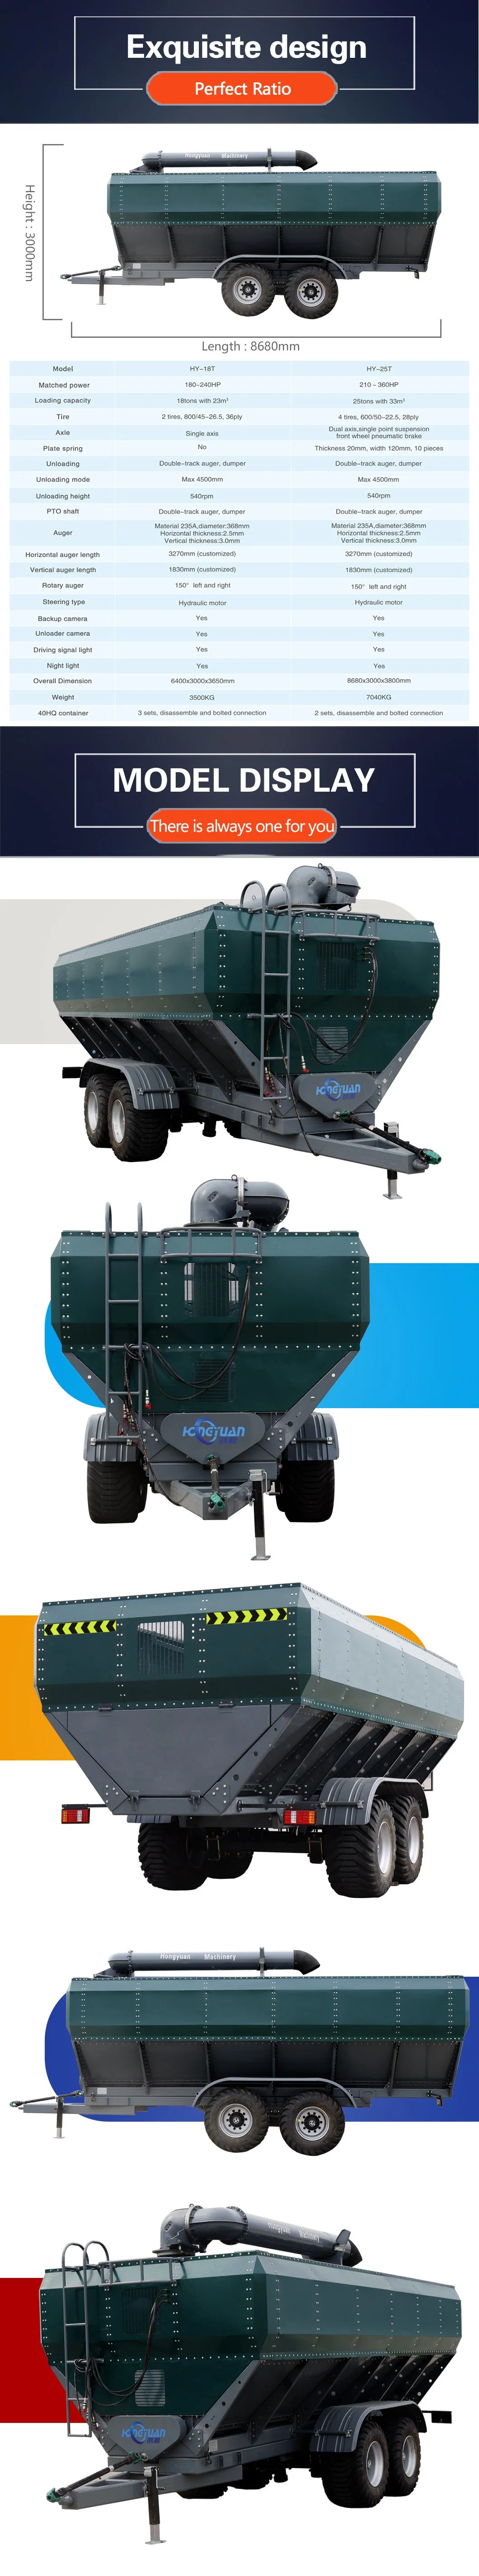 Dual Axis Dump Tractor Transfer Wagon Truck Tanker Agricultural Trailer Grain Cart